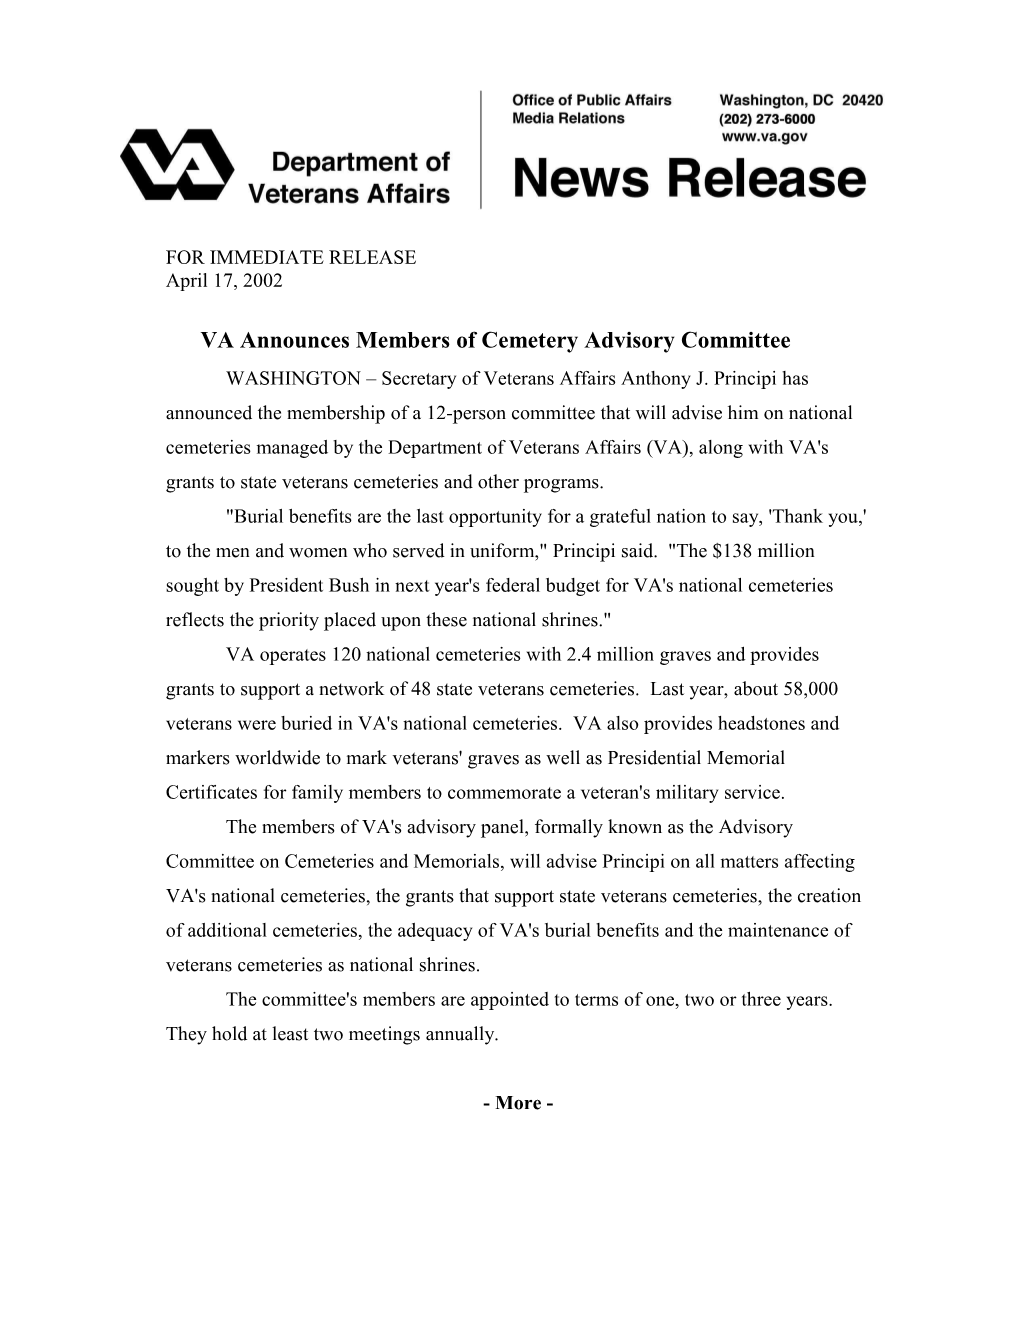 VA Announces Members of Cemetery Advisory Committee